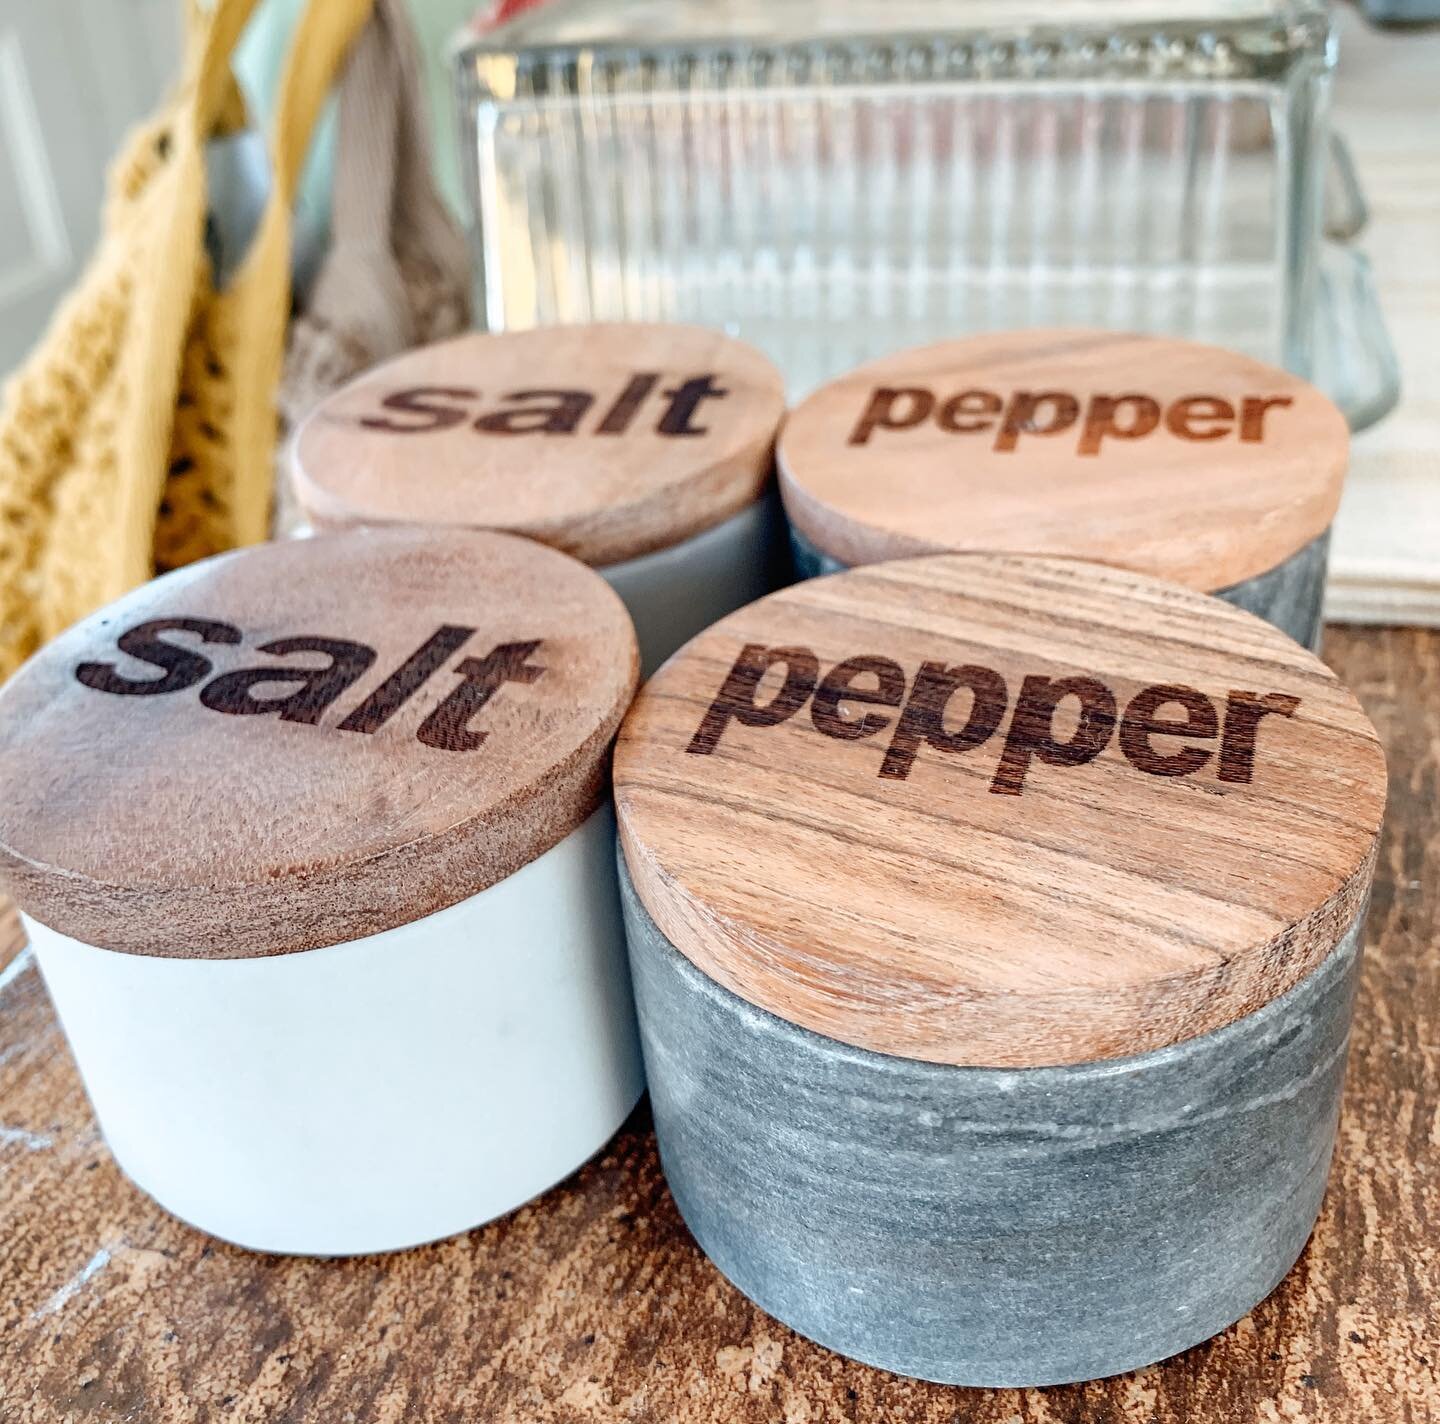 Our marble salt and pepper pinch pots are back in stock! ✨🧂
.
.
.
#hudsonandperry #ameliaisland #fernandinabeach #shoplocal #loveamelia #fernandinabeachmainstreet